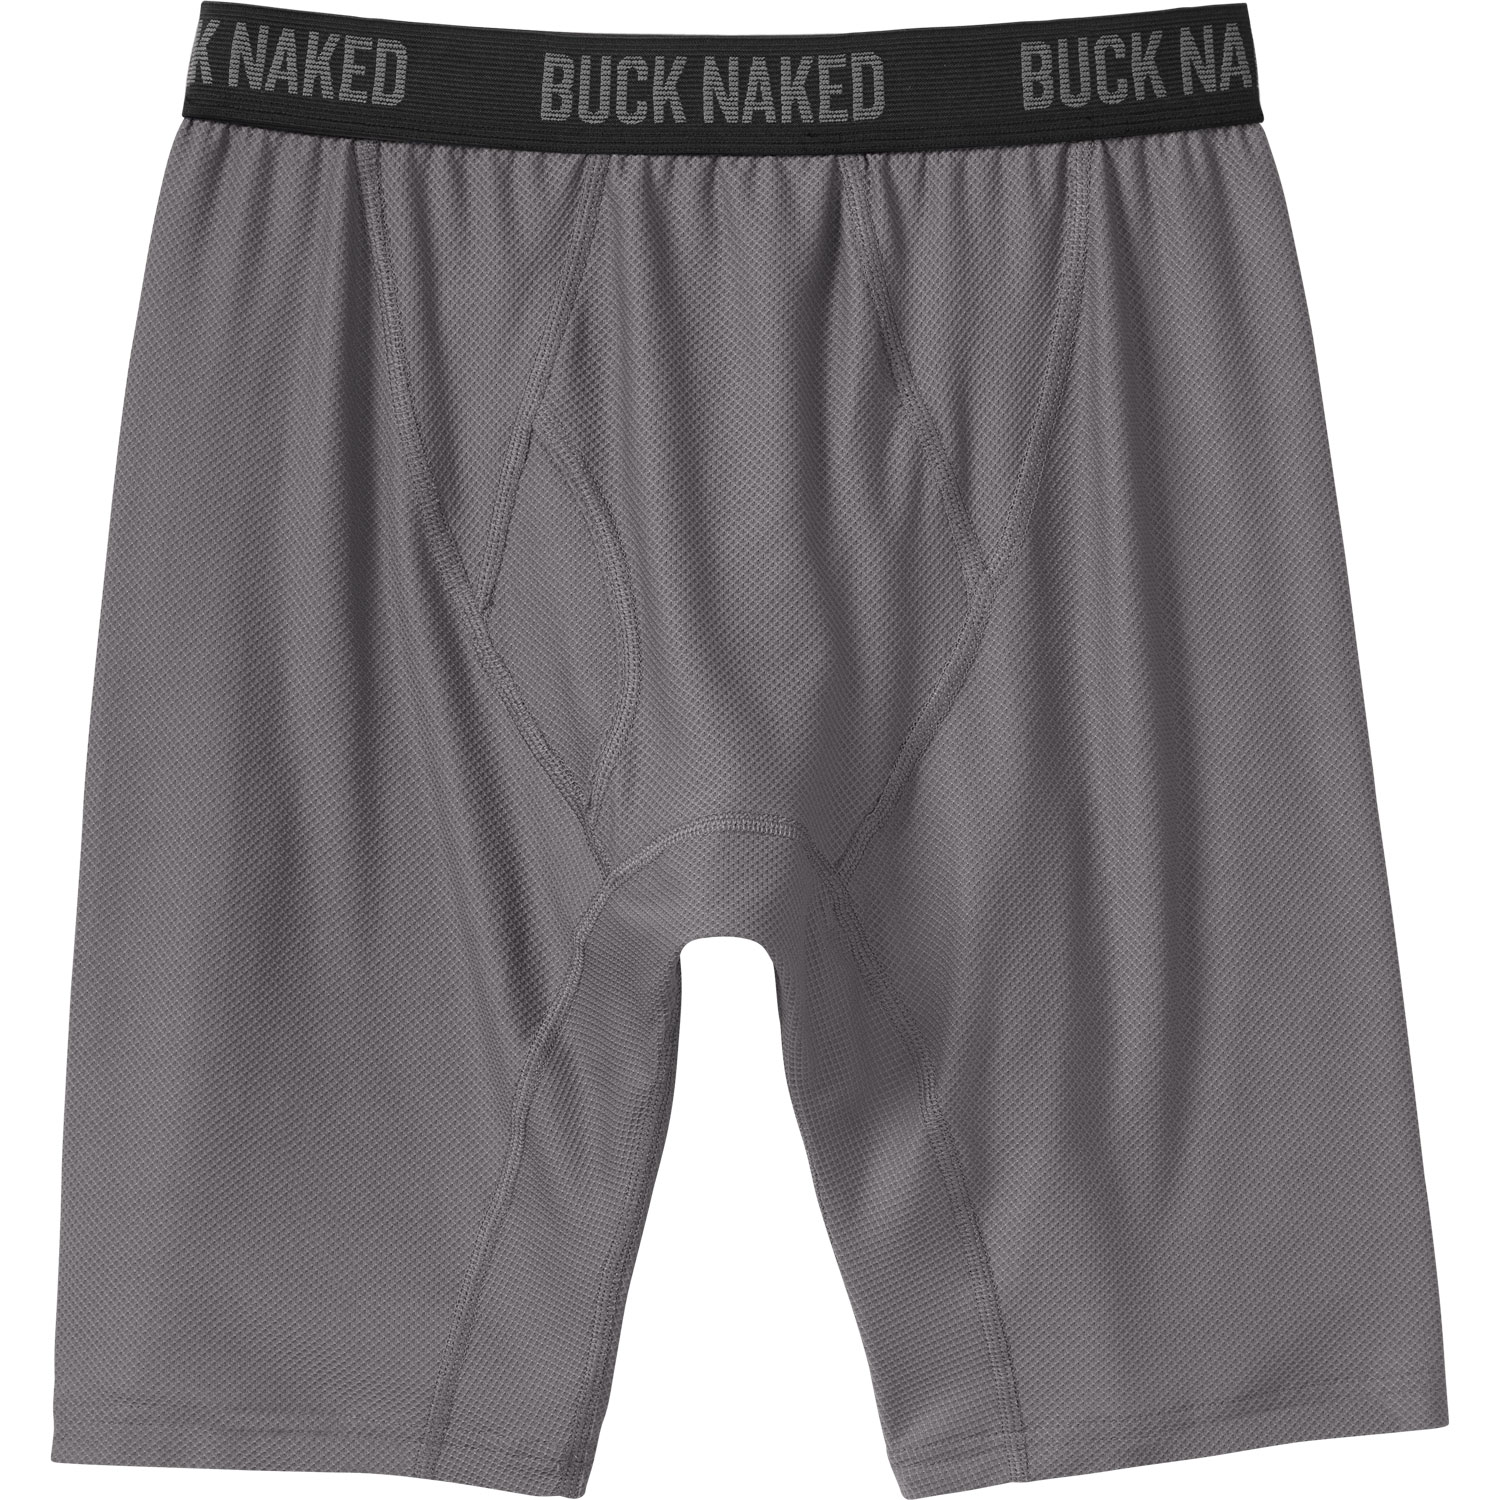 Duluth Buck Naked Underwear Review - Performance Boxer Briefs